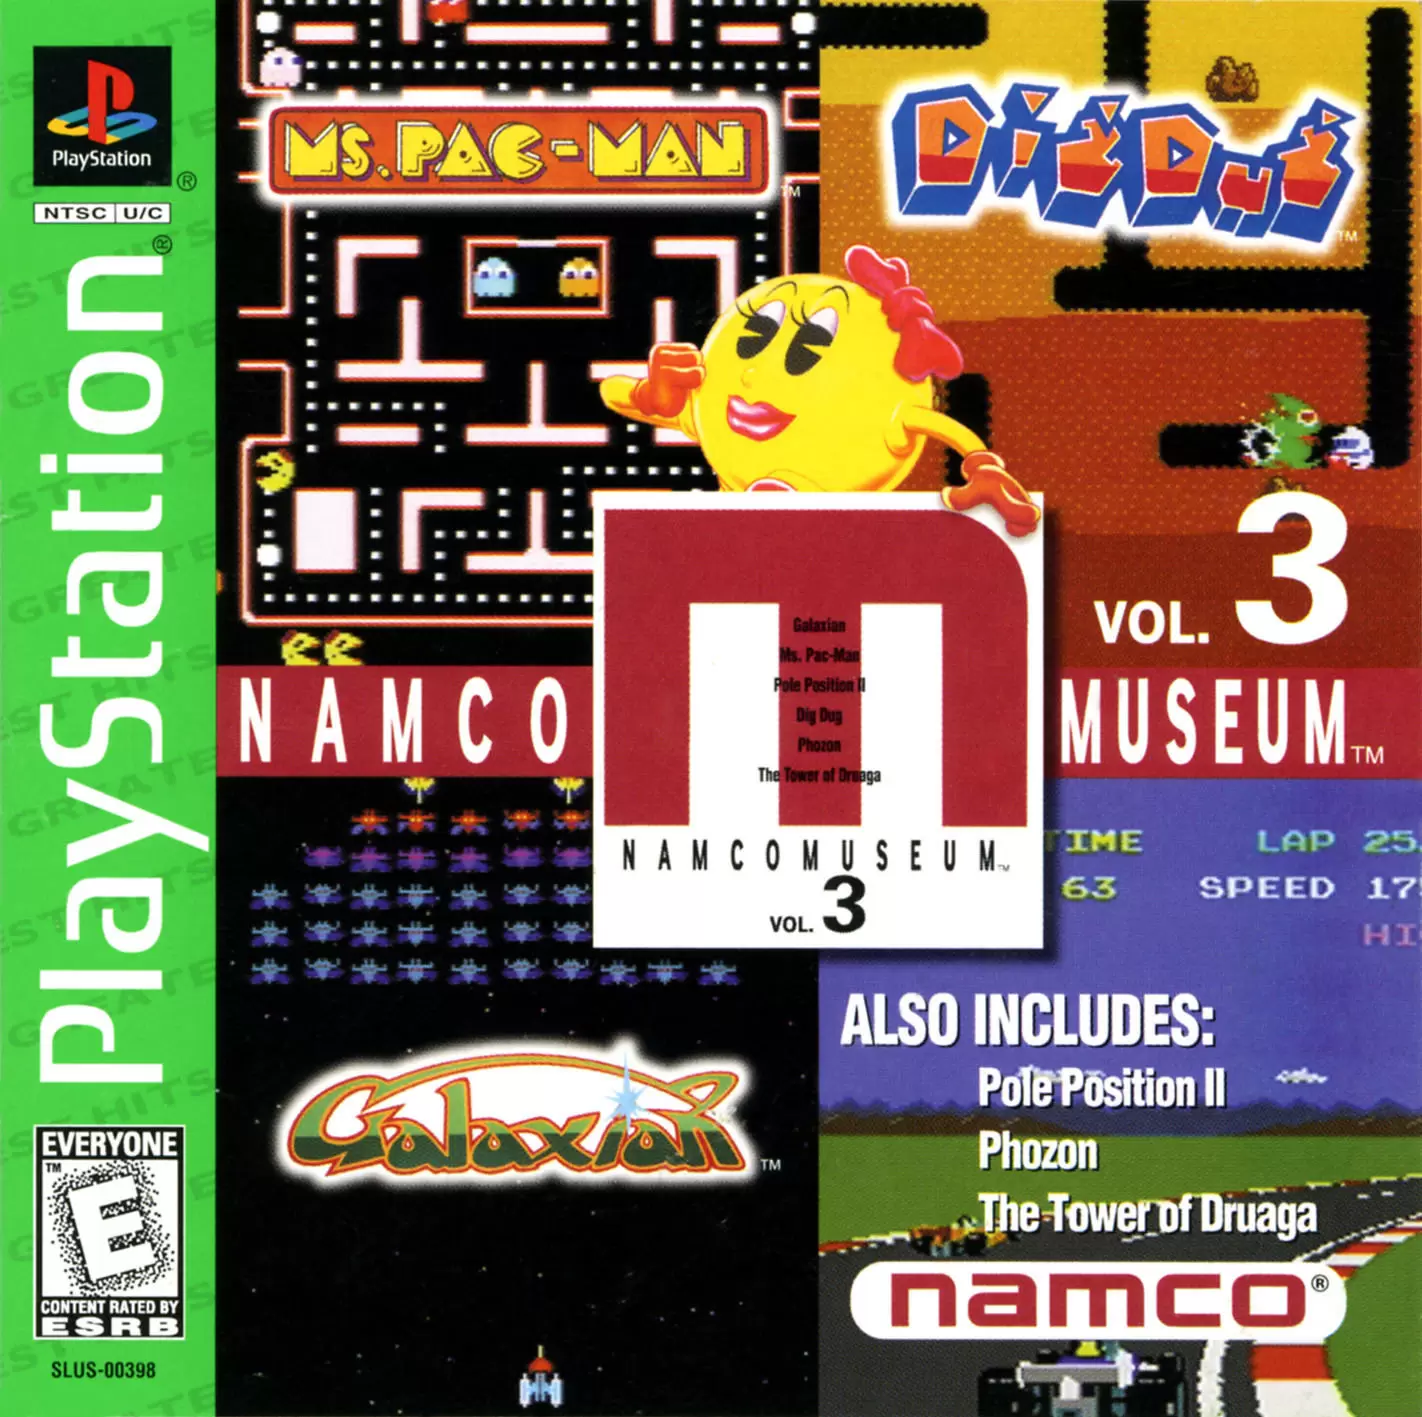 Playstation games - Namco Museum Vol. 3